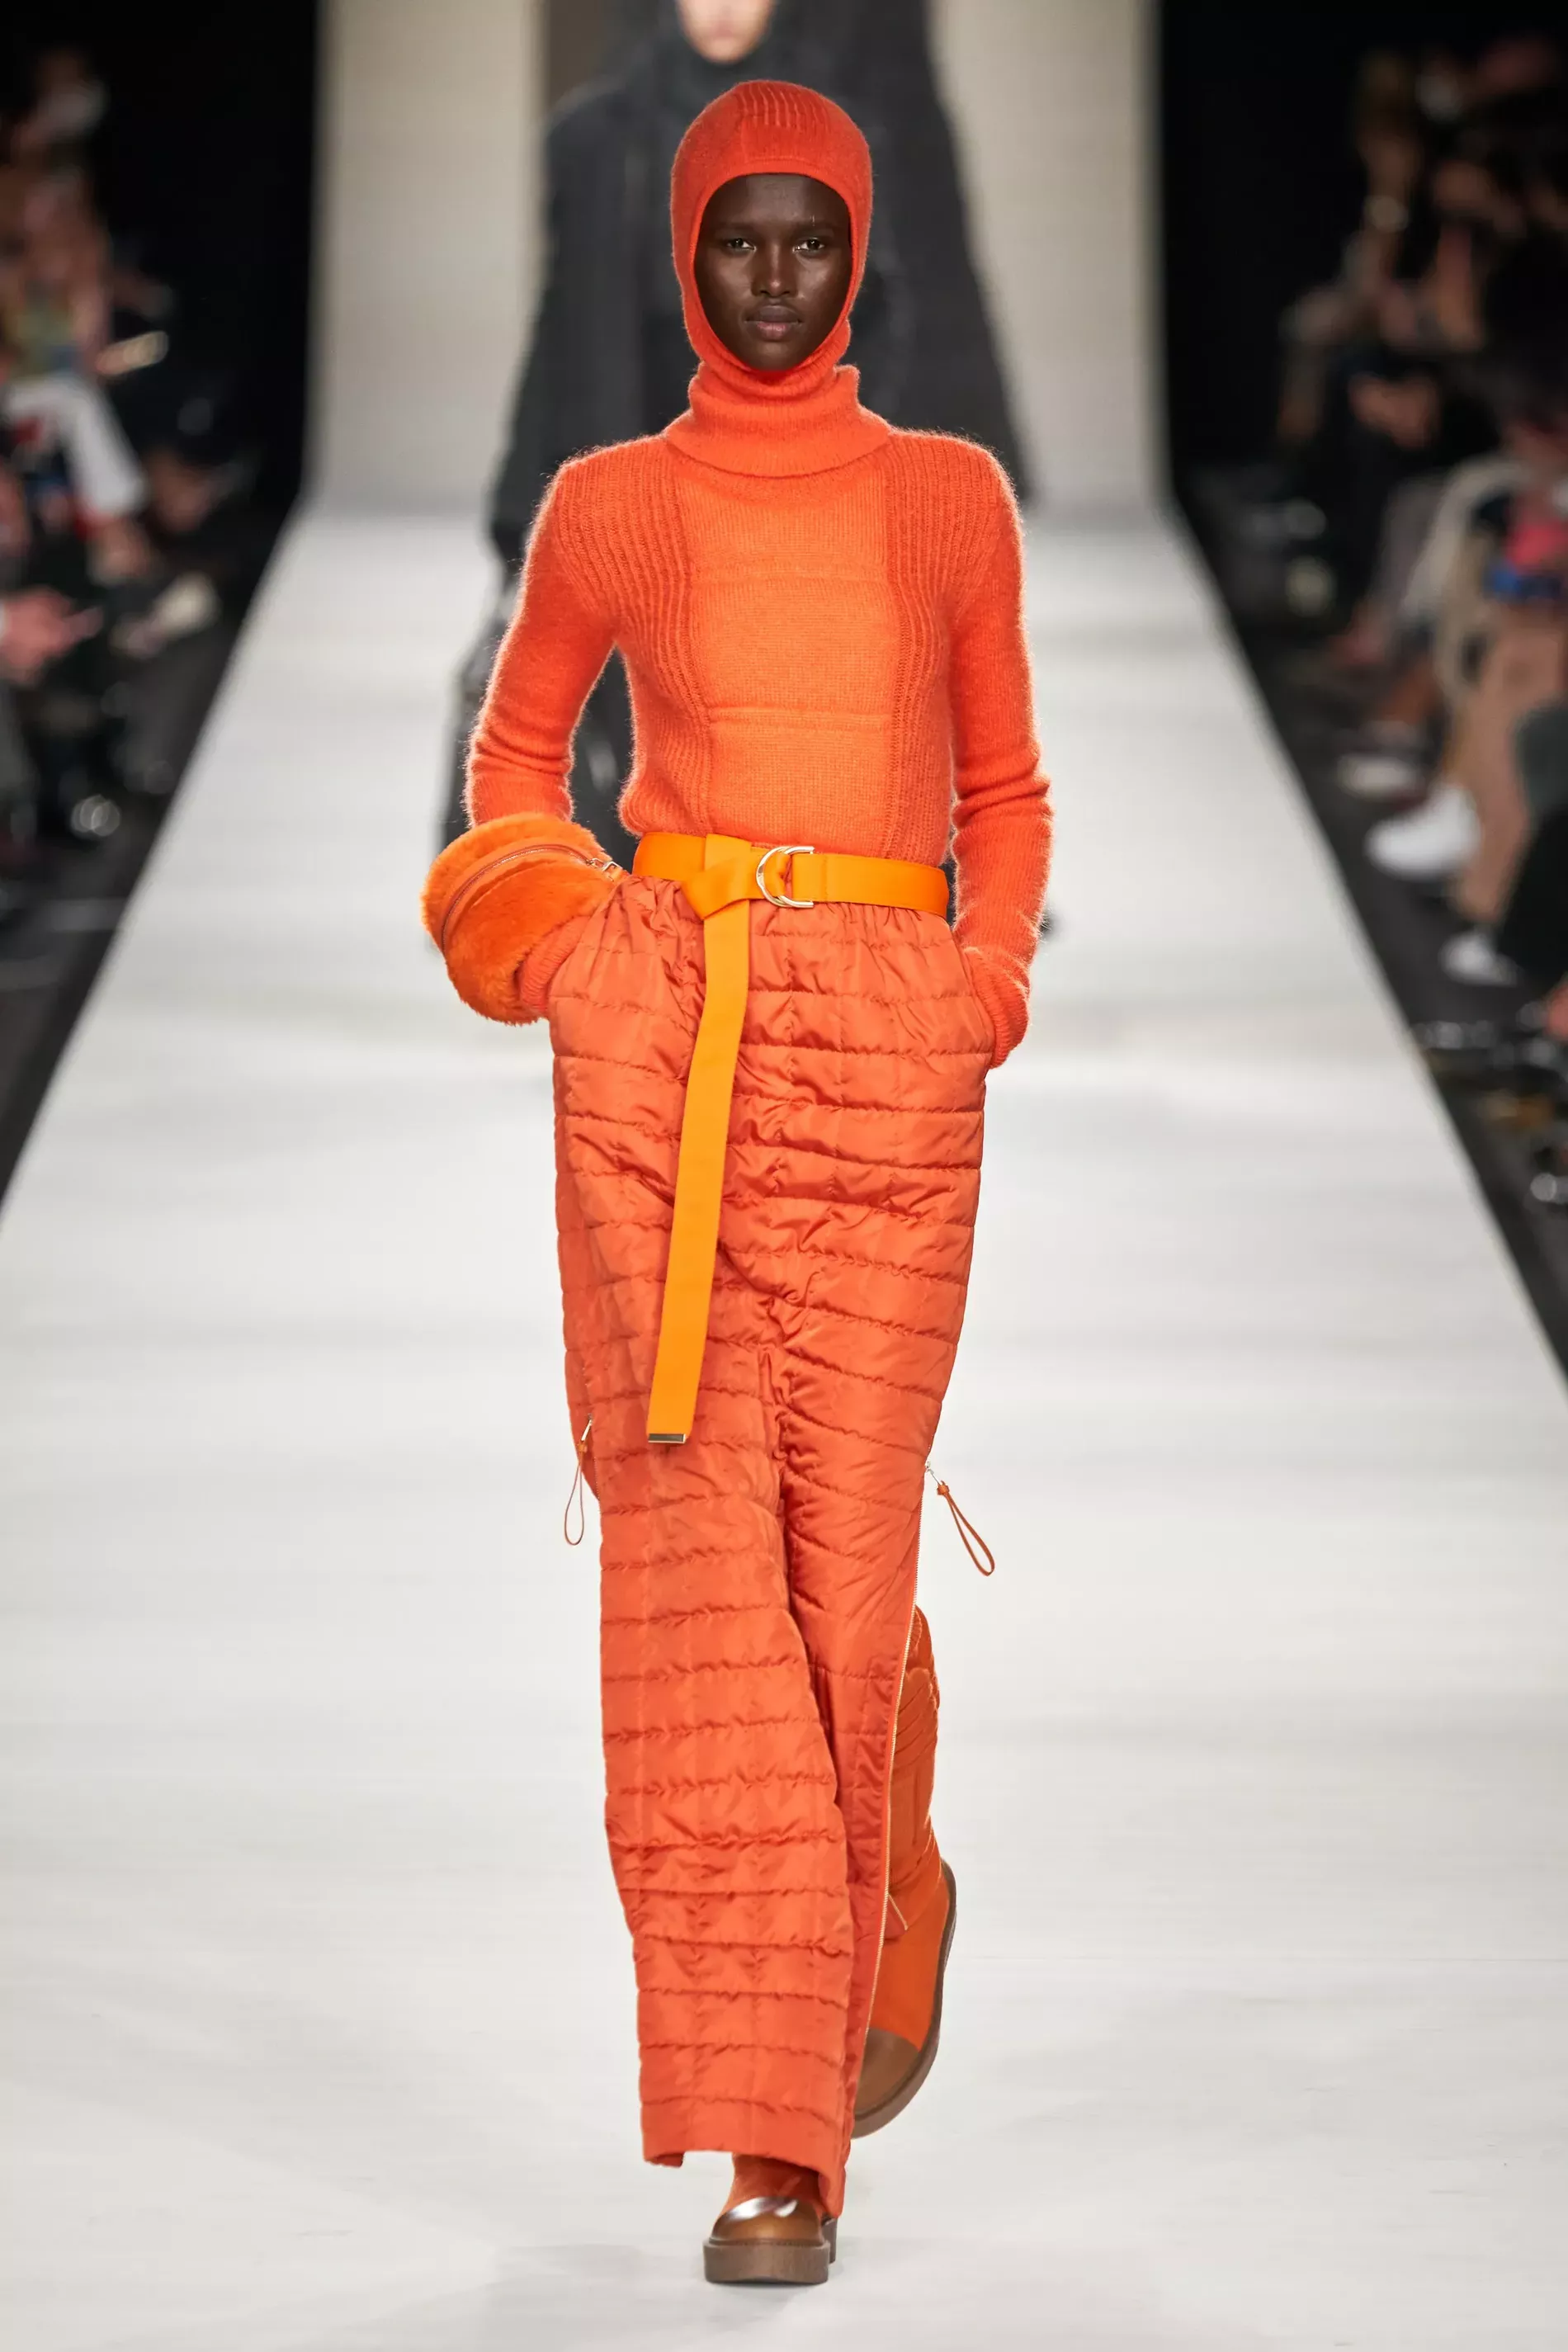 Balaclava Fashion Trend 2022